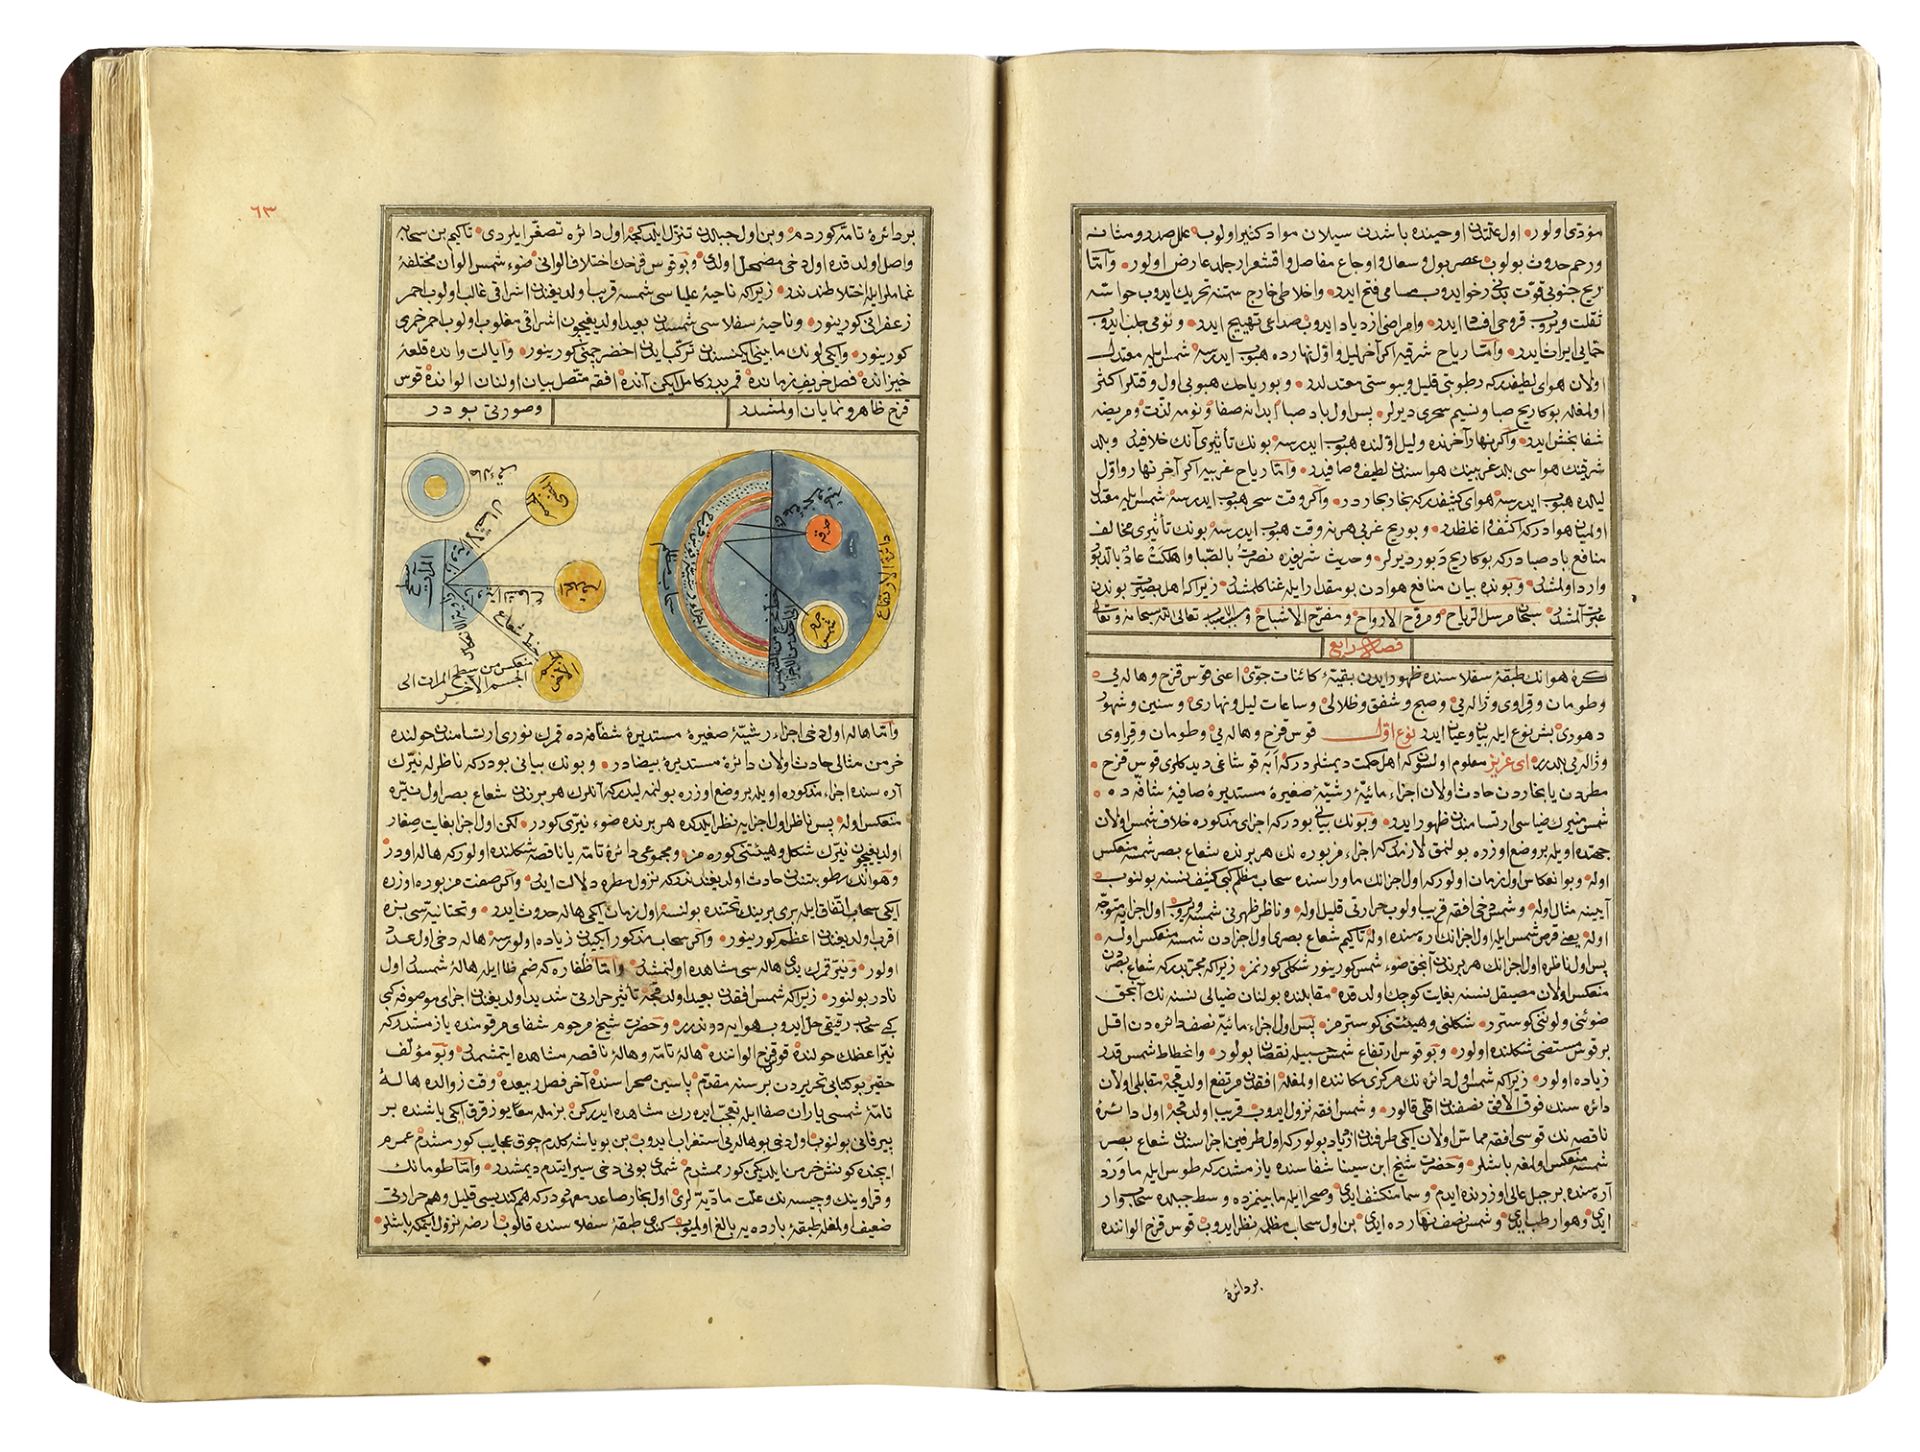 MARIFETNAME, IBRAHIM HAKKI, COPIED BY SAE'D ALLAH BIN ALI BIN AHMED, TURKEY, 1221 AH/1806 AD - Image 56 of 58